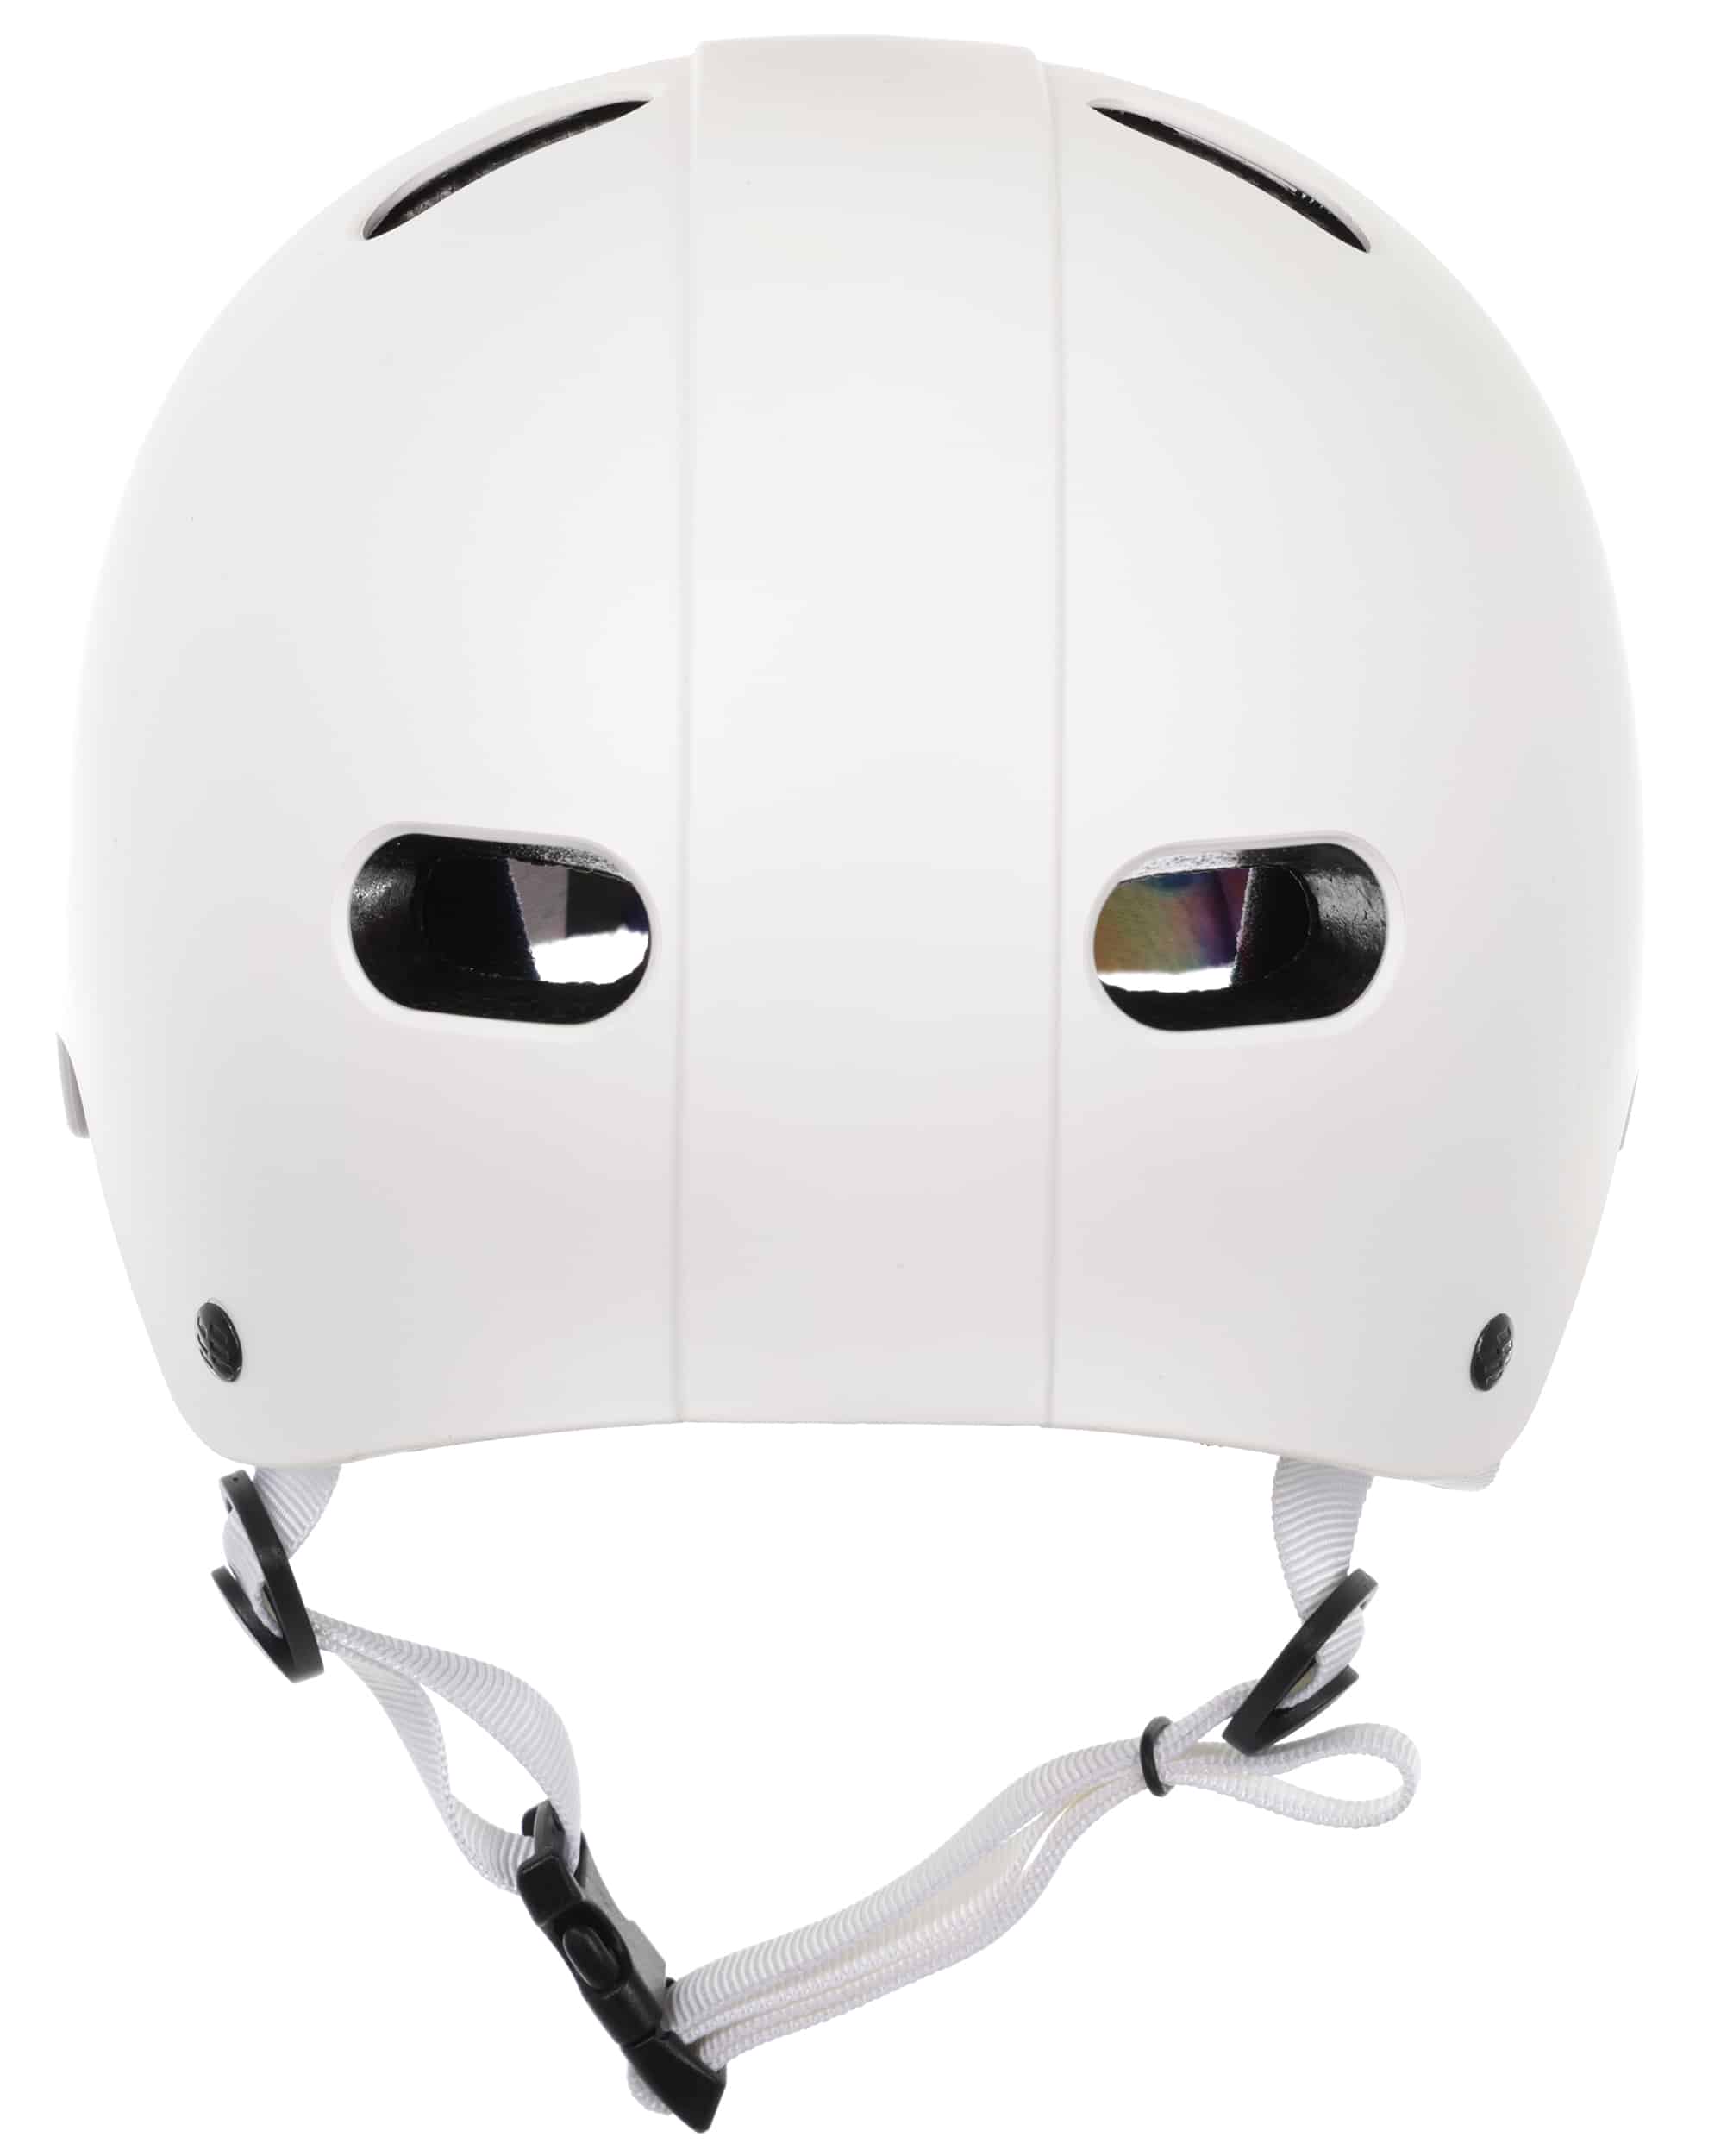 Destroyer DH 1 Certified Skate Helmet - white | Tactics